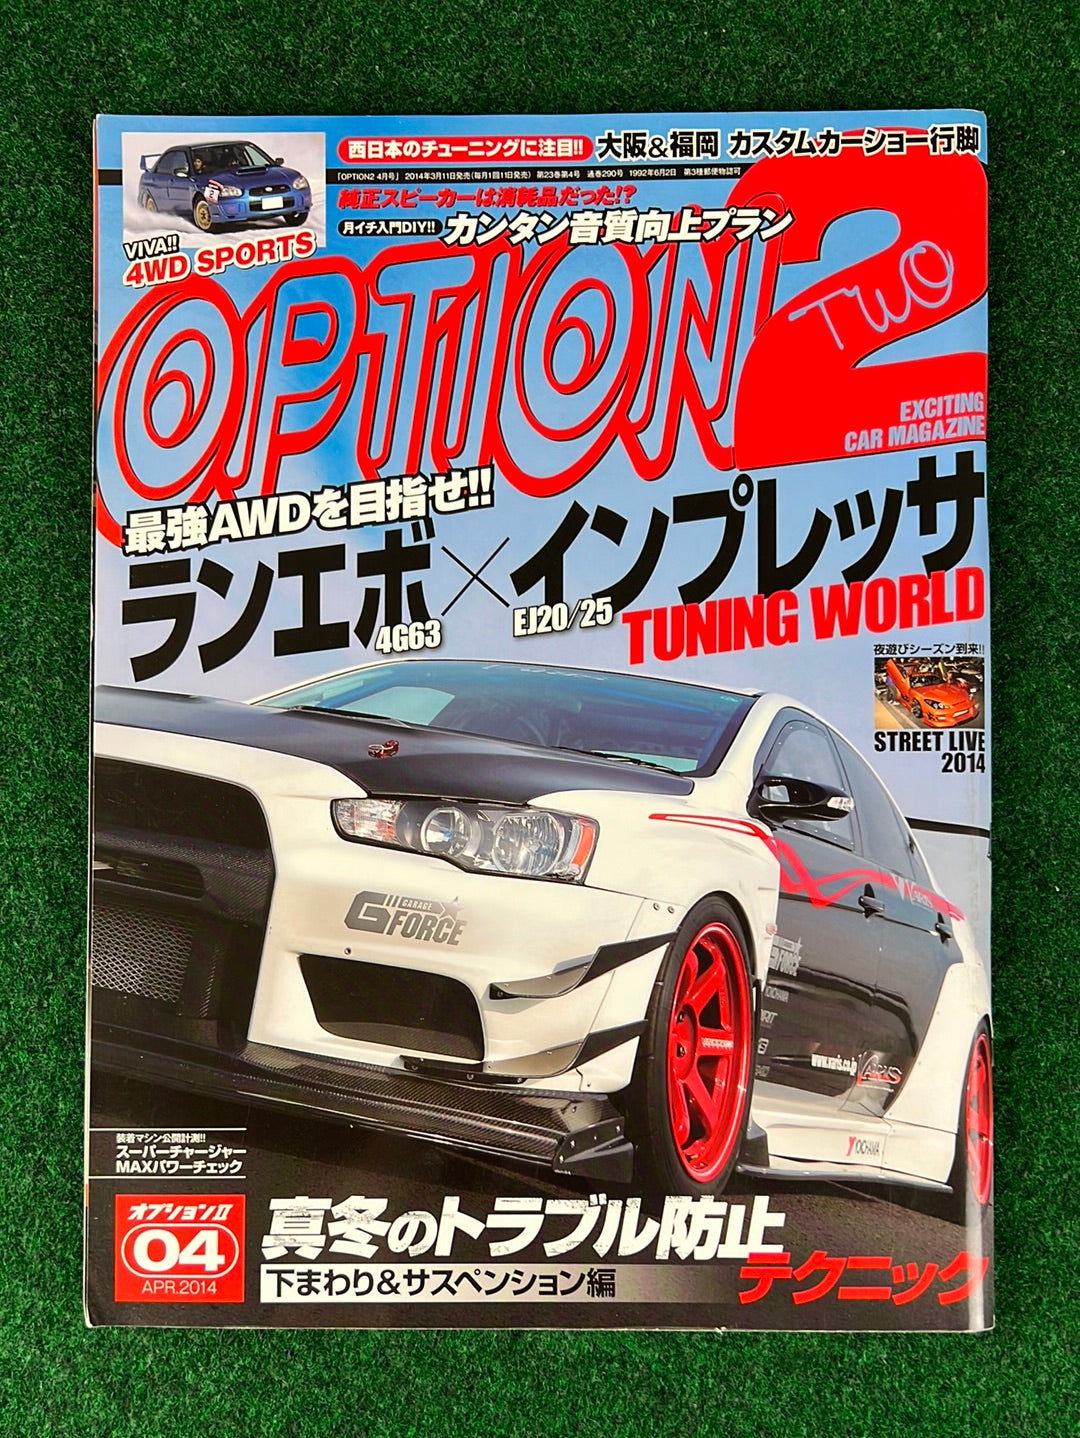 Option2 Magazine - April 2014